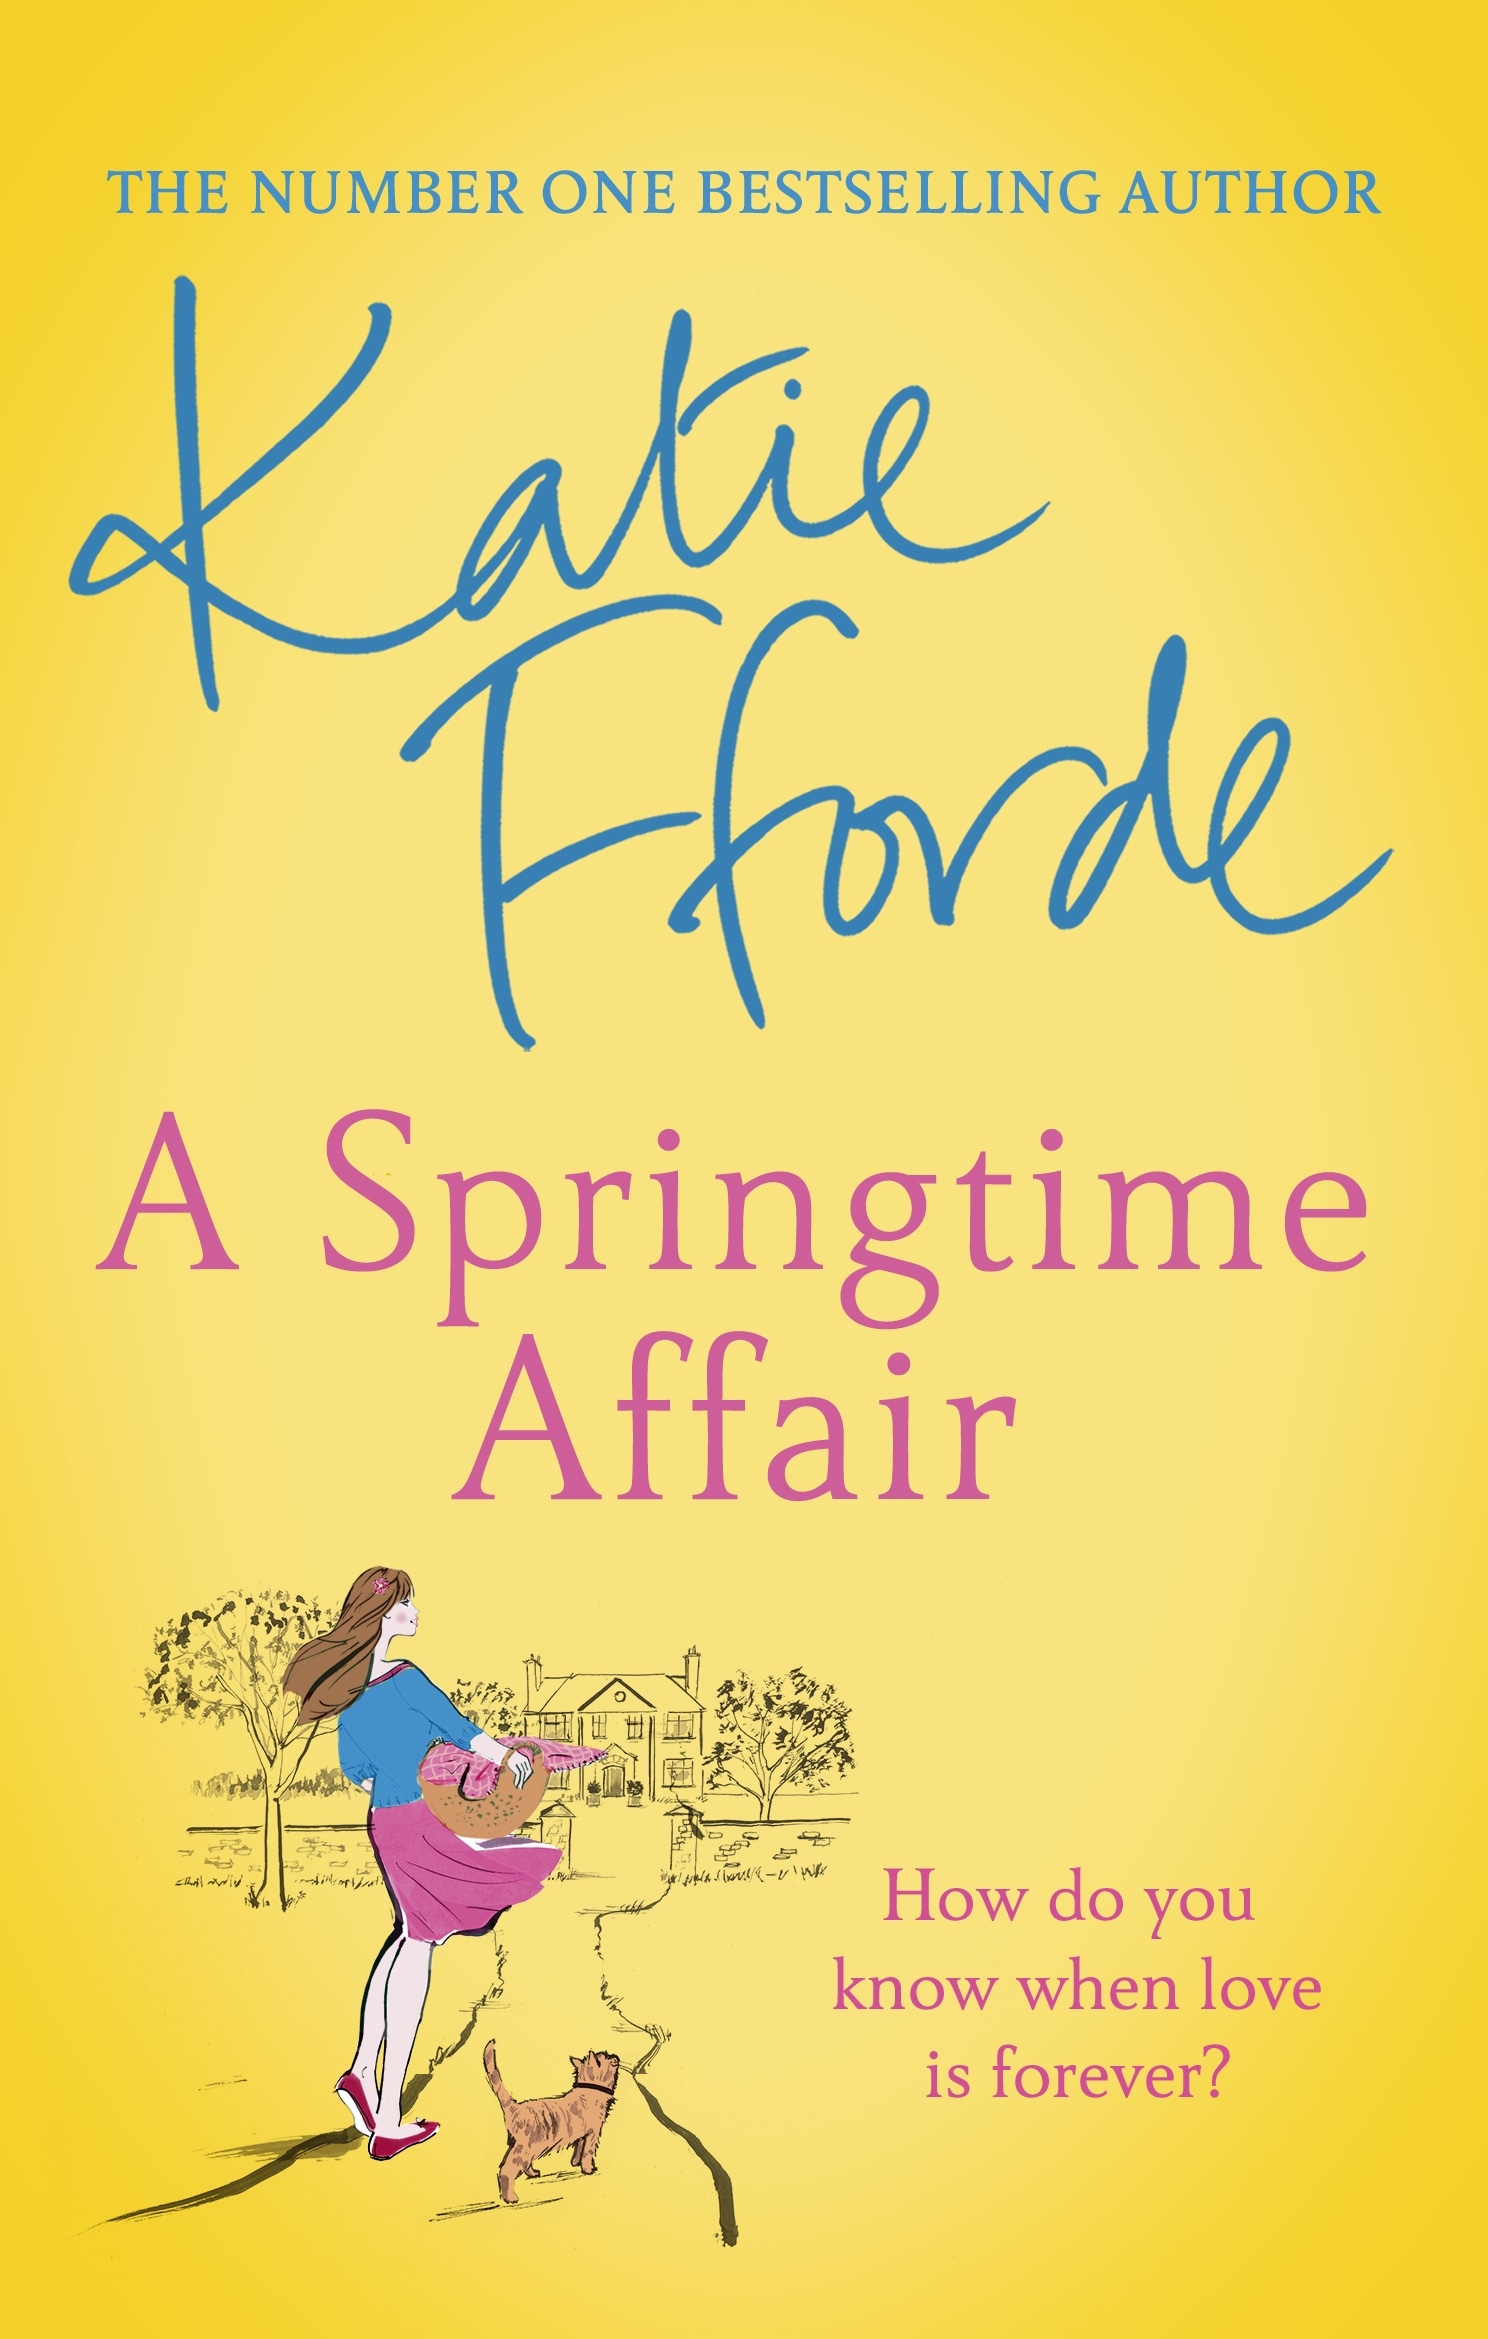 Book “A Springtime Affair” by Katie Fforde — January 21, 2021